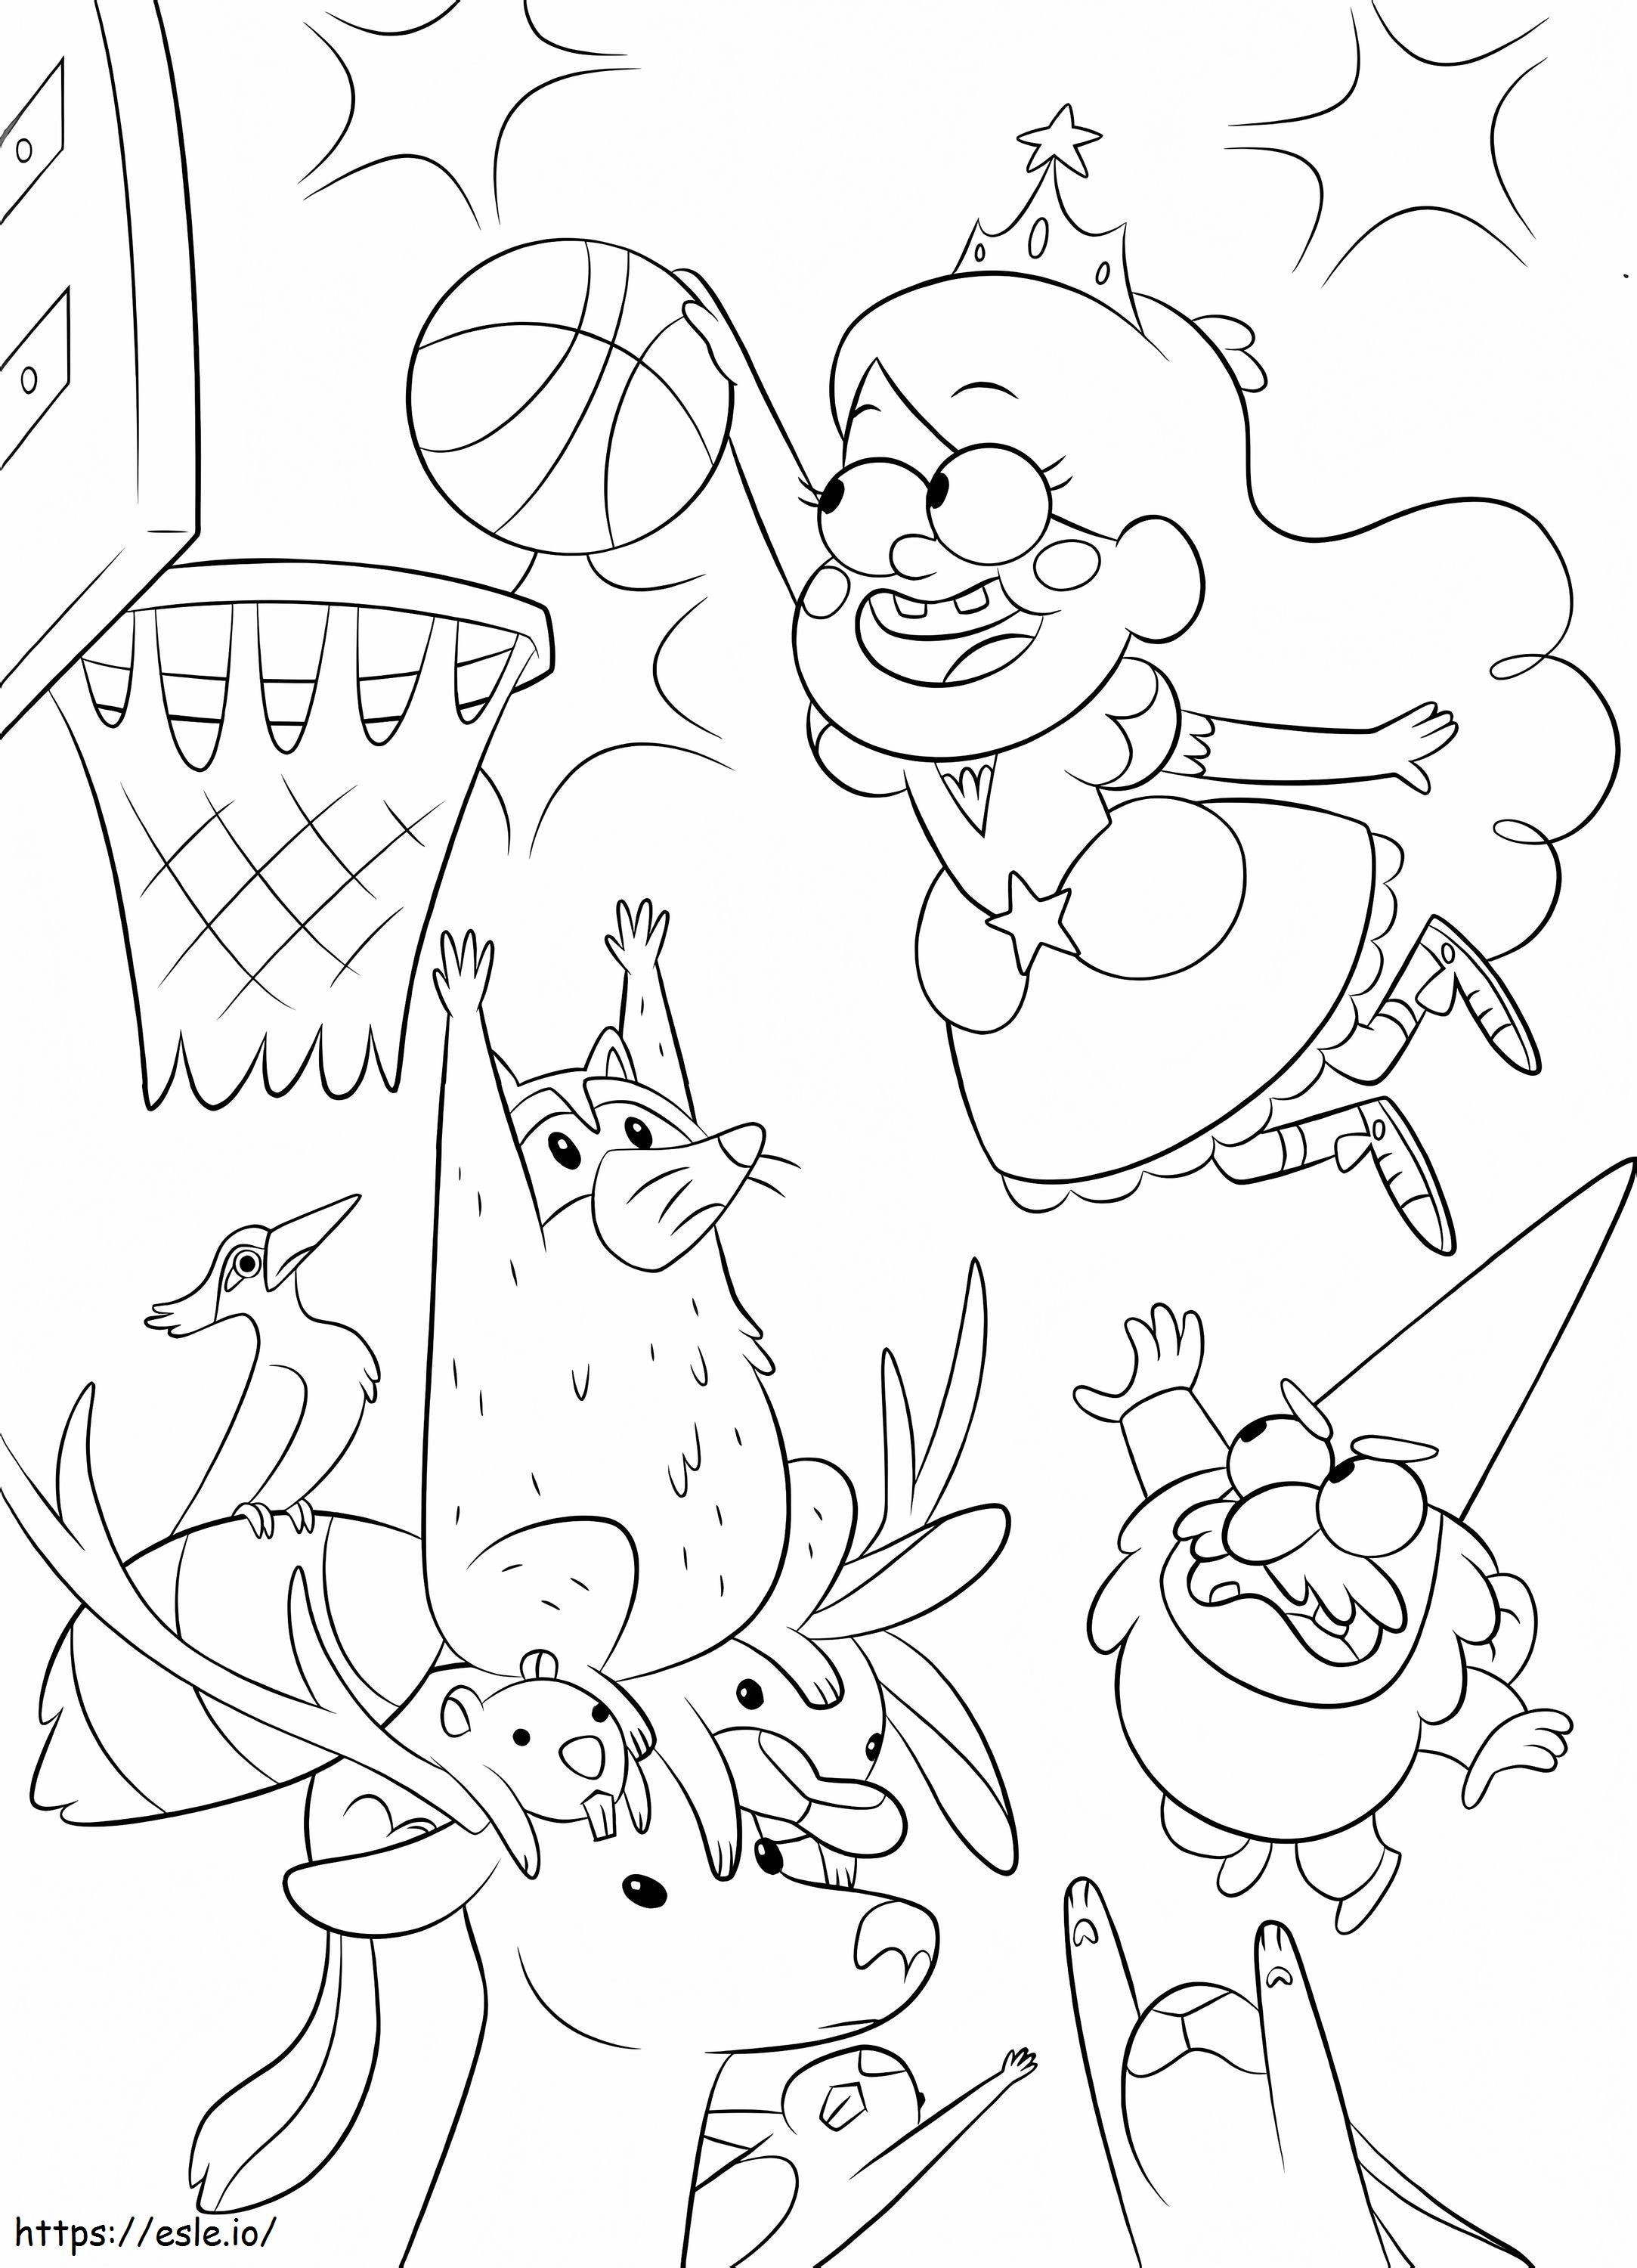 Princess Mabel Plays Basketball coloring page